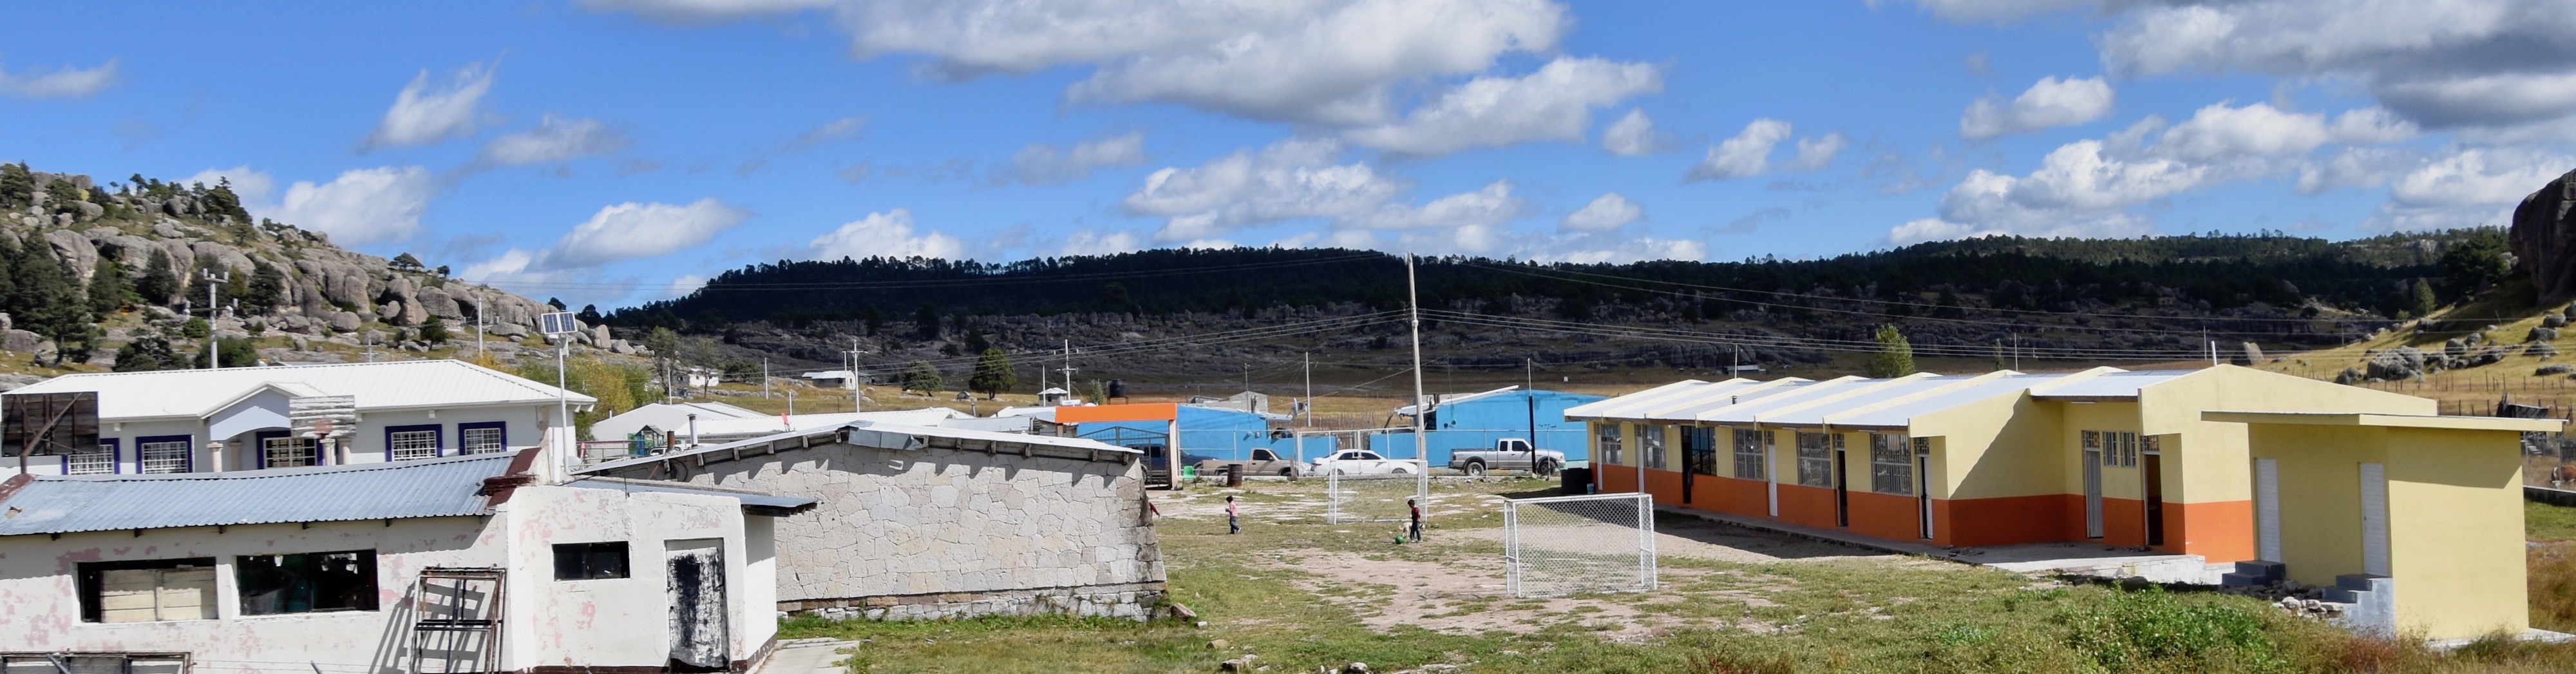 Tarahumara Residential School, Creel